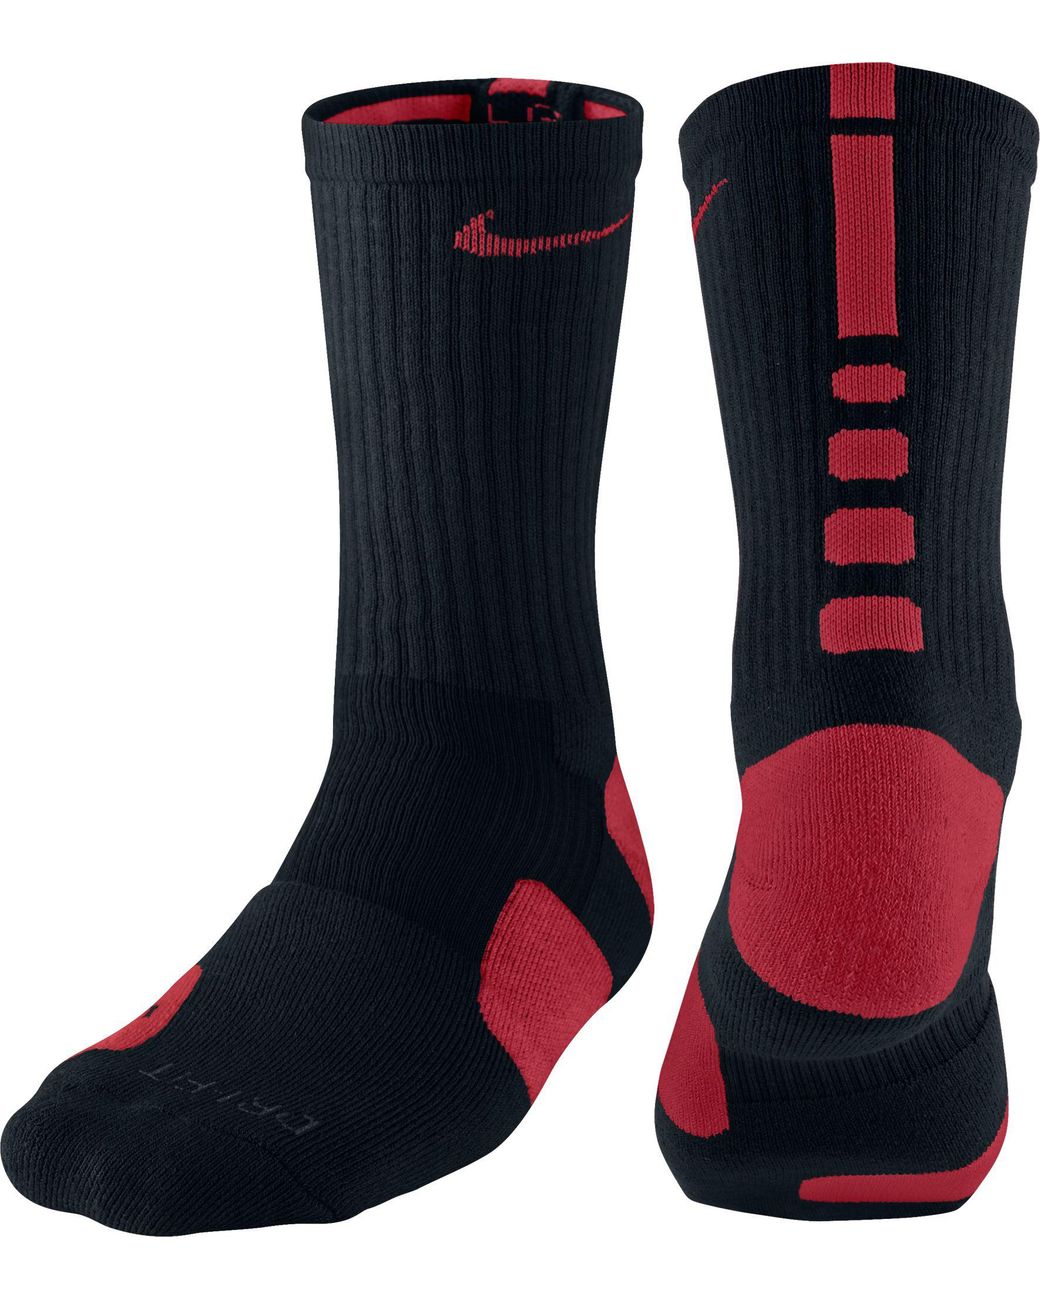 Nike Synthetic Dri-fit Elite 1.0 Crew Basketball Socks in Black/Red (Black)  for Men | Lyst